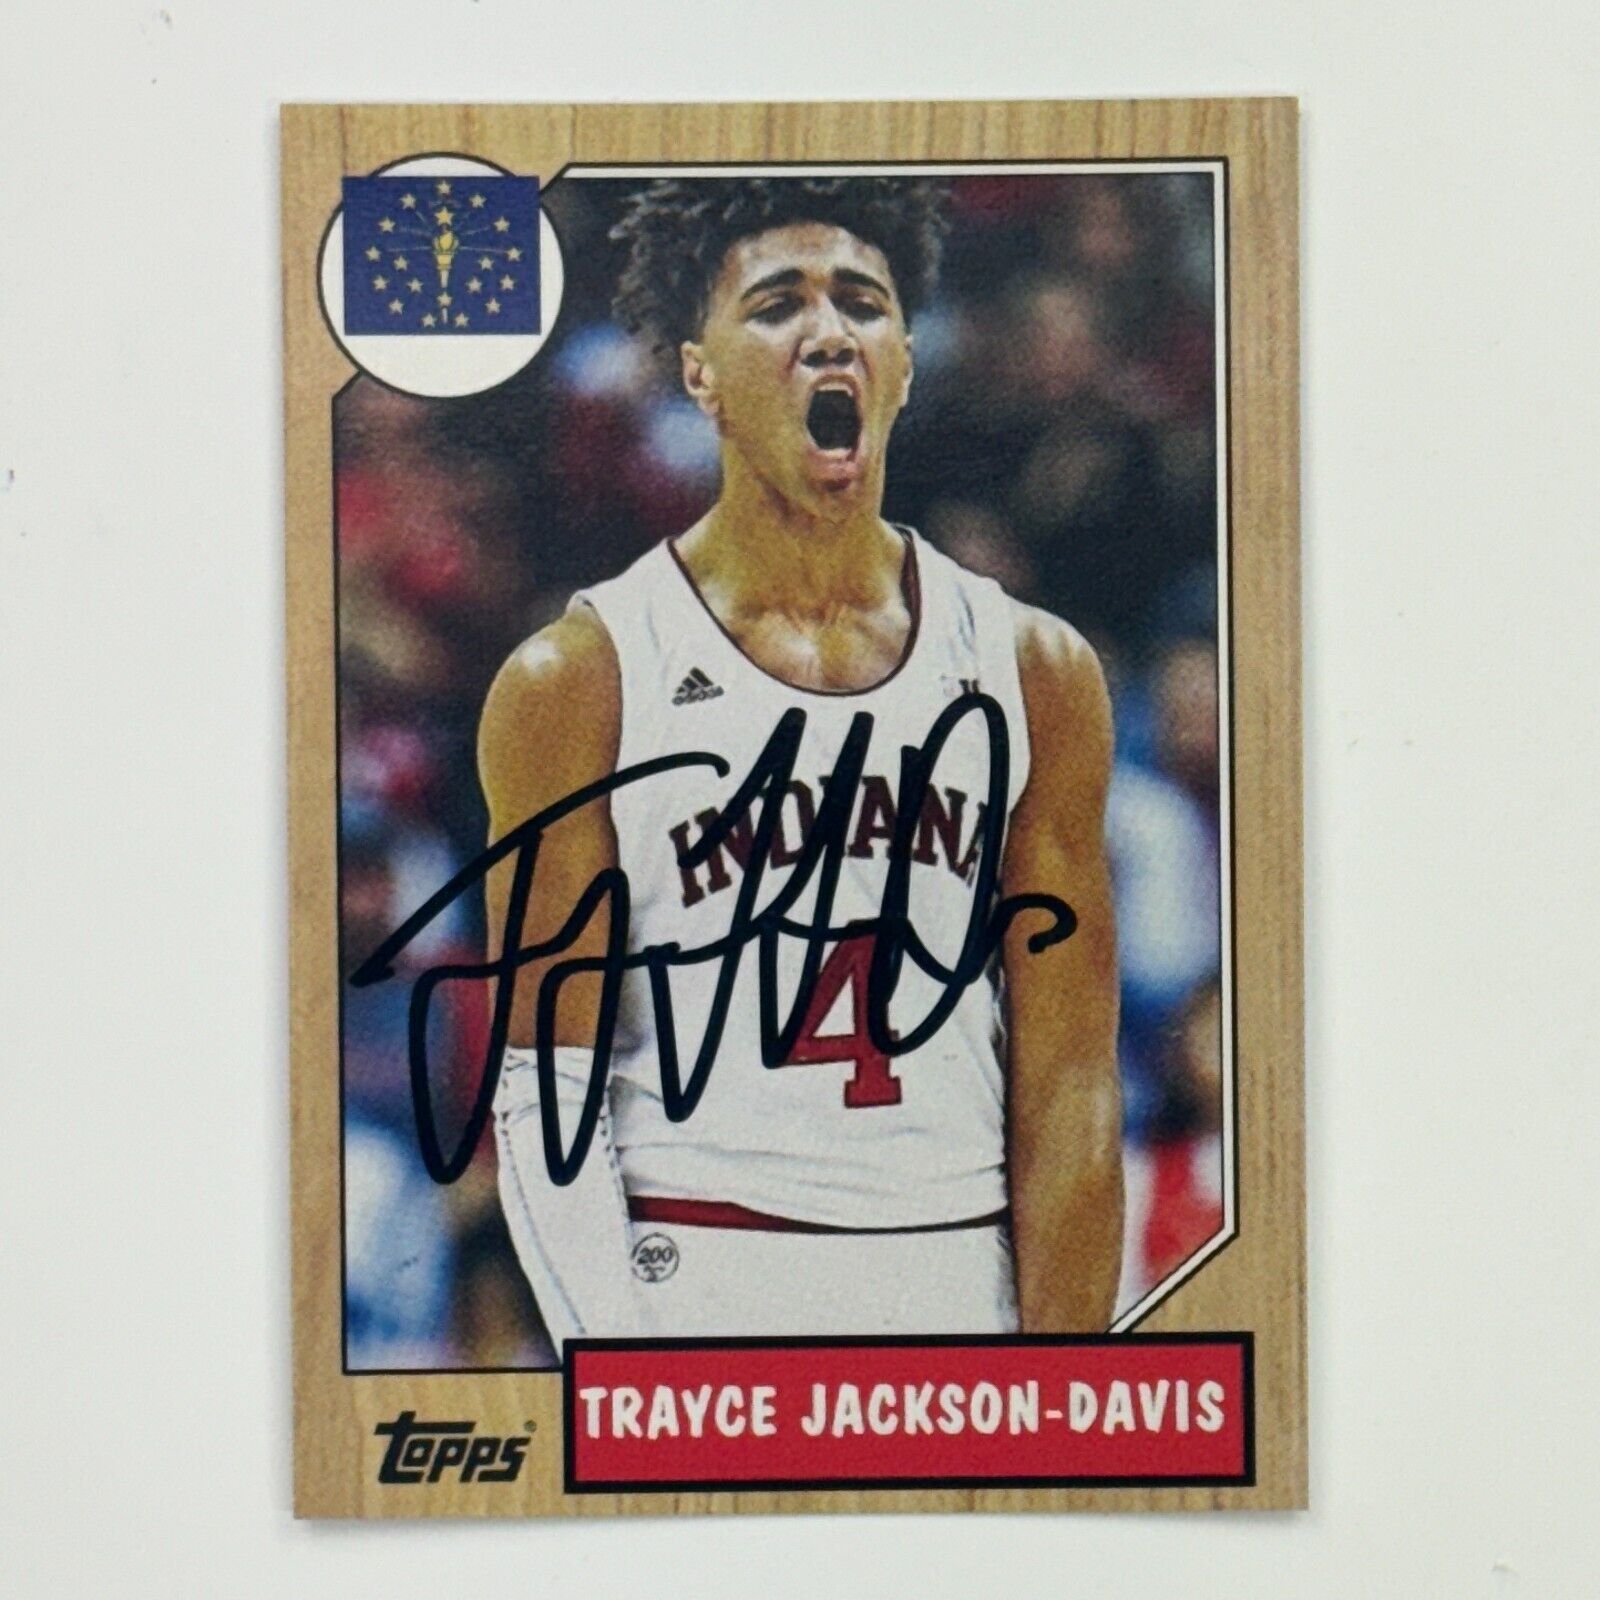 2021 Topps TRAYCE JACKSON DAVIS RC Auto Autograph Golden State Warriors #d/1000